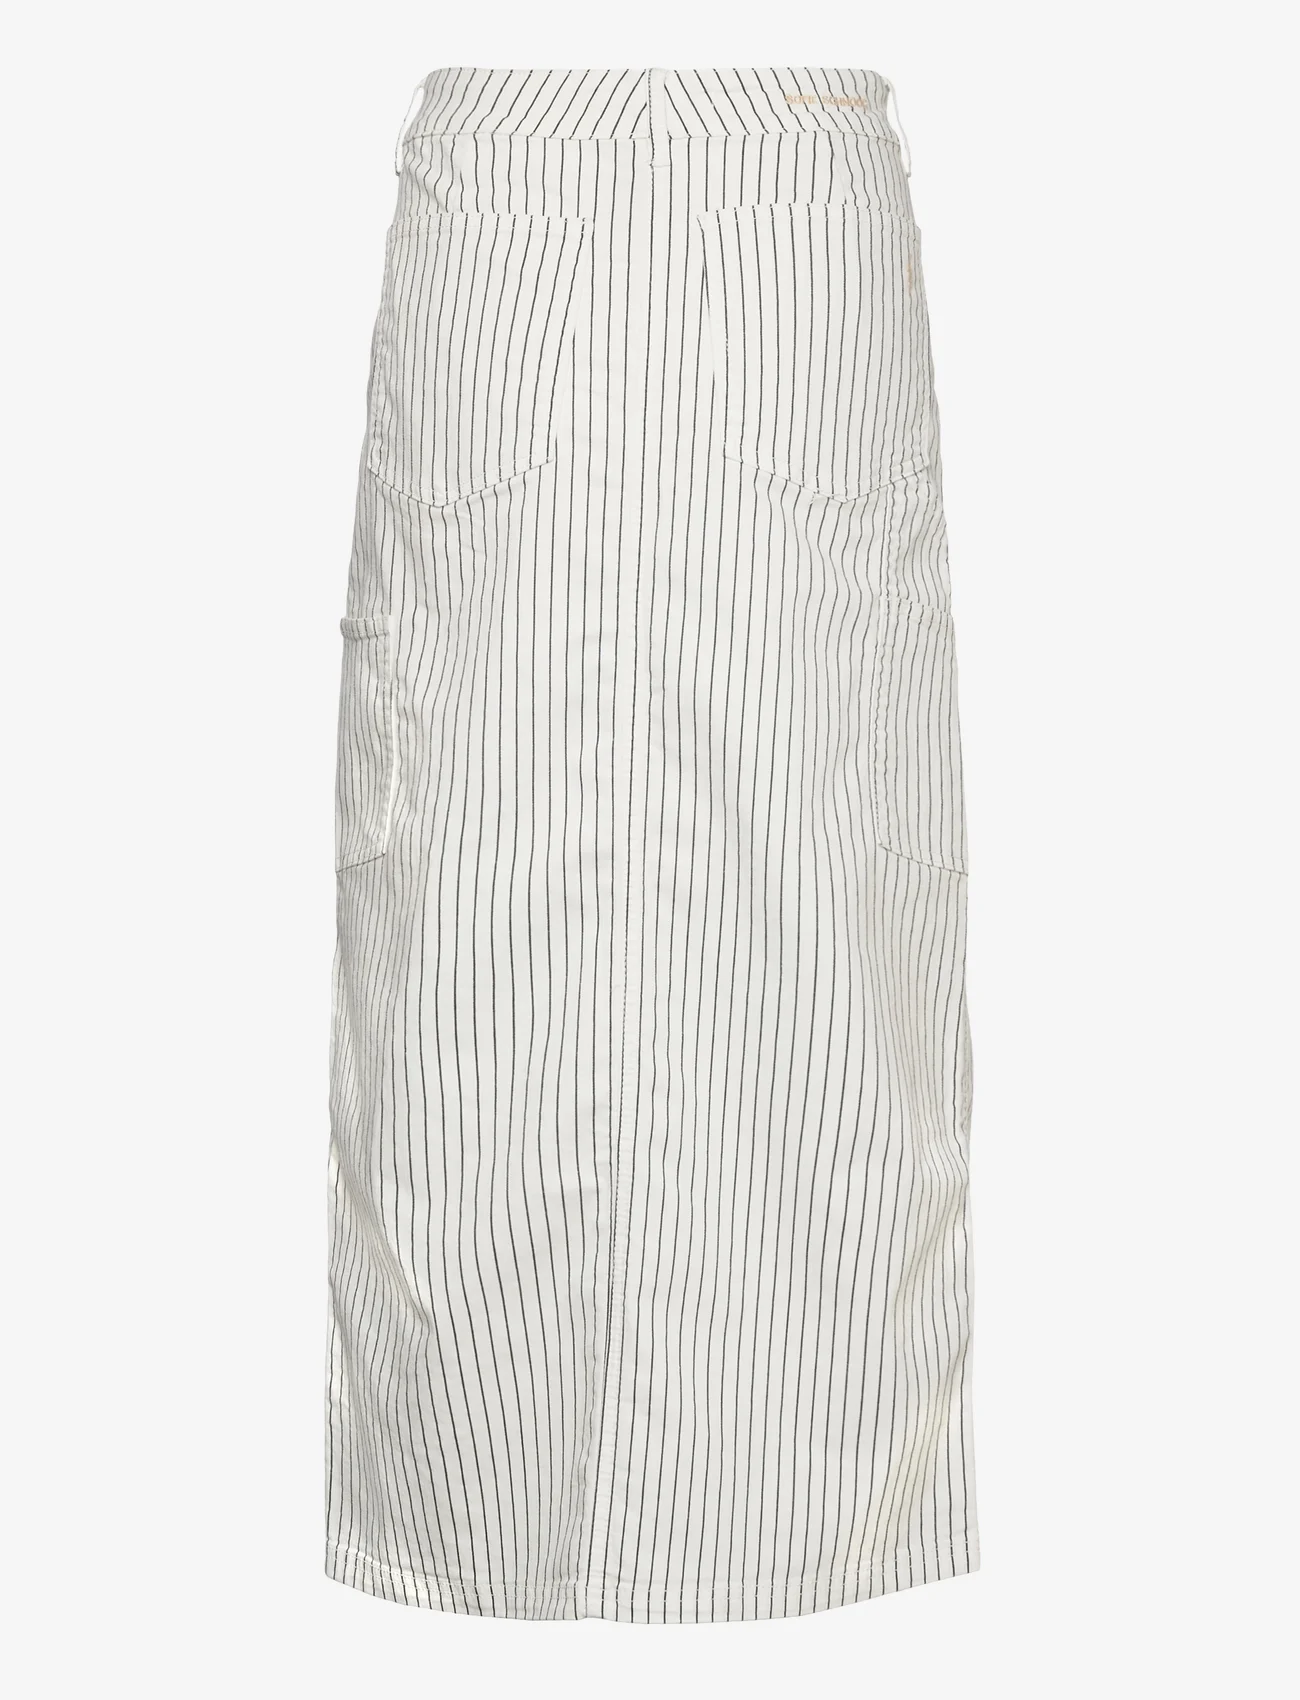 Sofie Schnoor - Skirt - ilgi sijonai - off white striped - 1